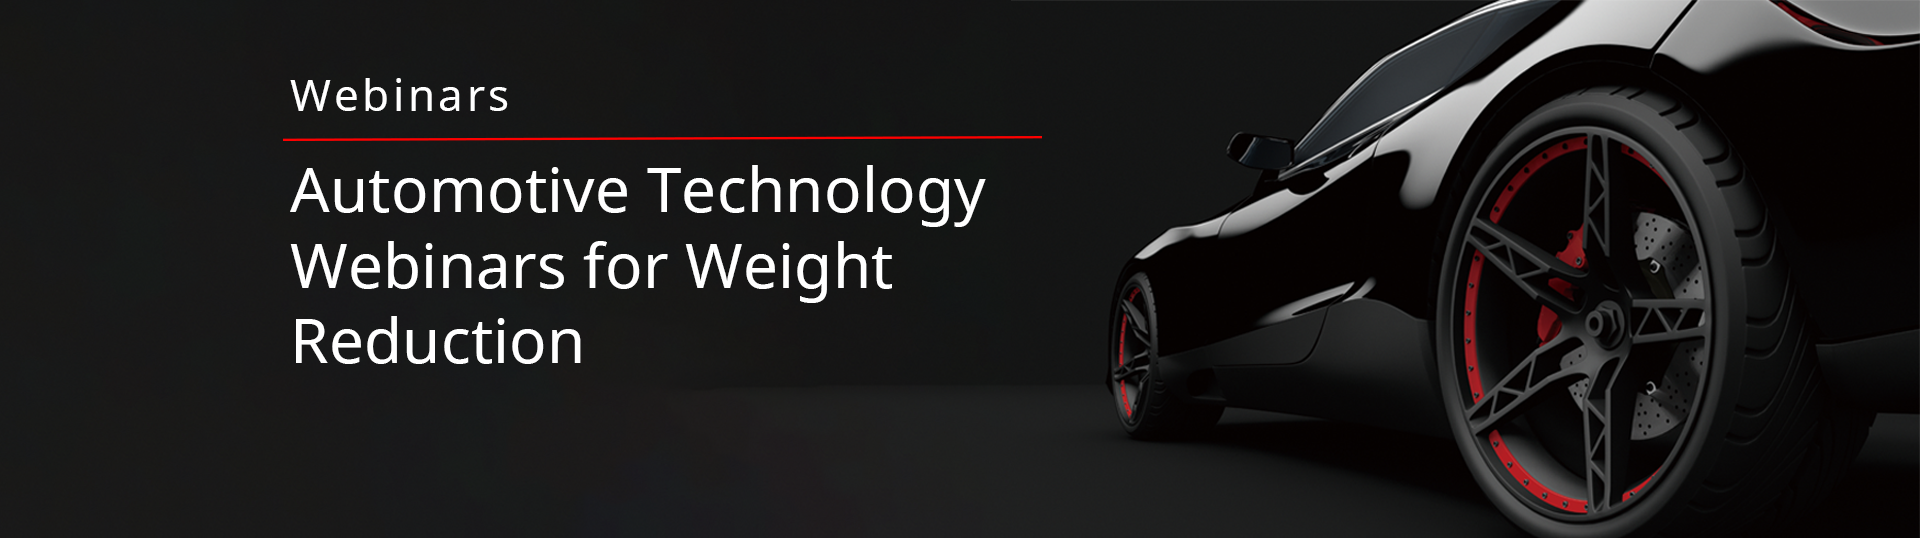 SHIMADZU Automotive Technology Webinars for Weight Reduction